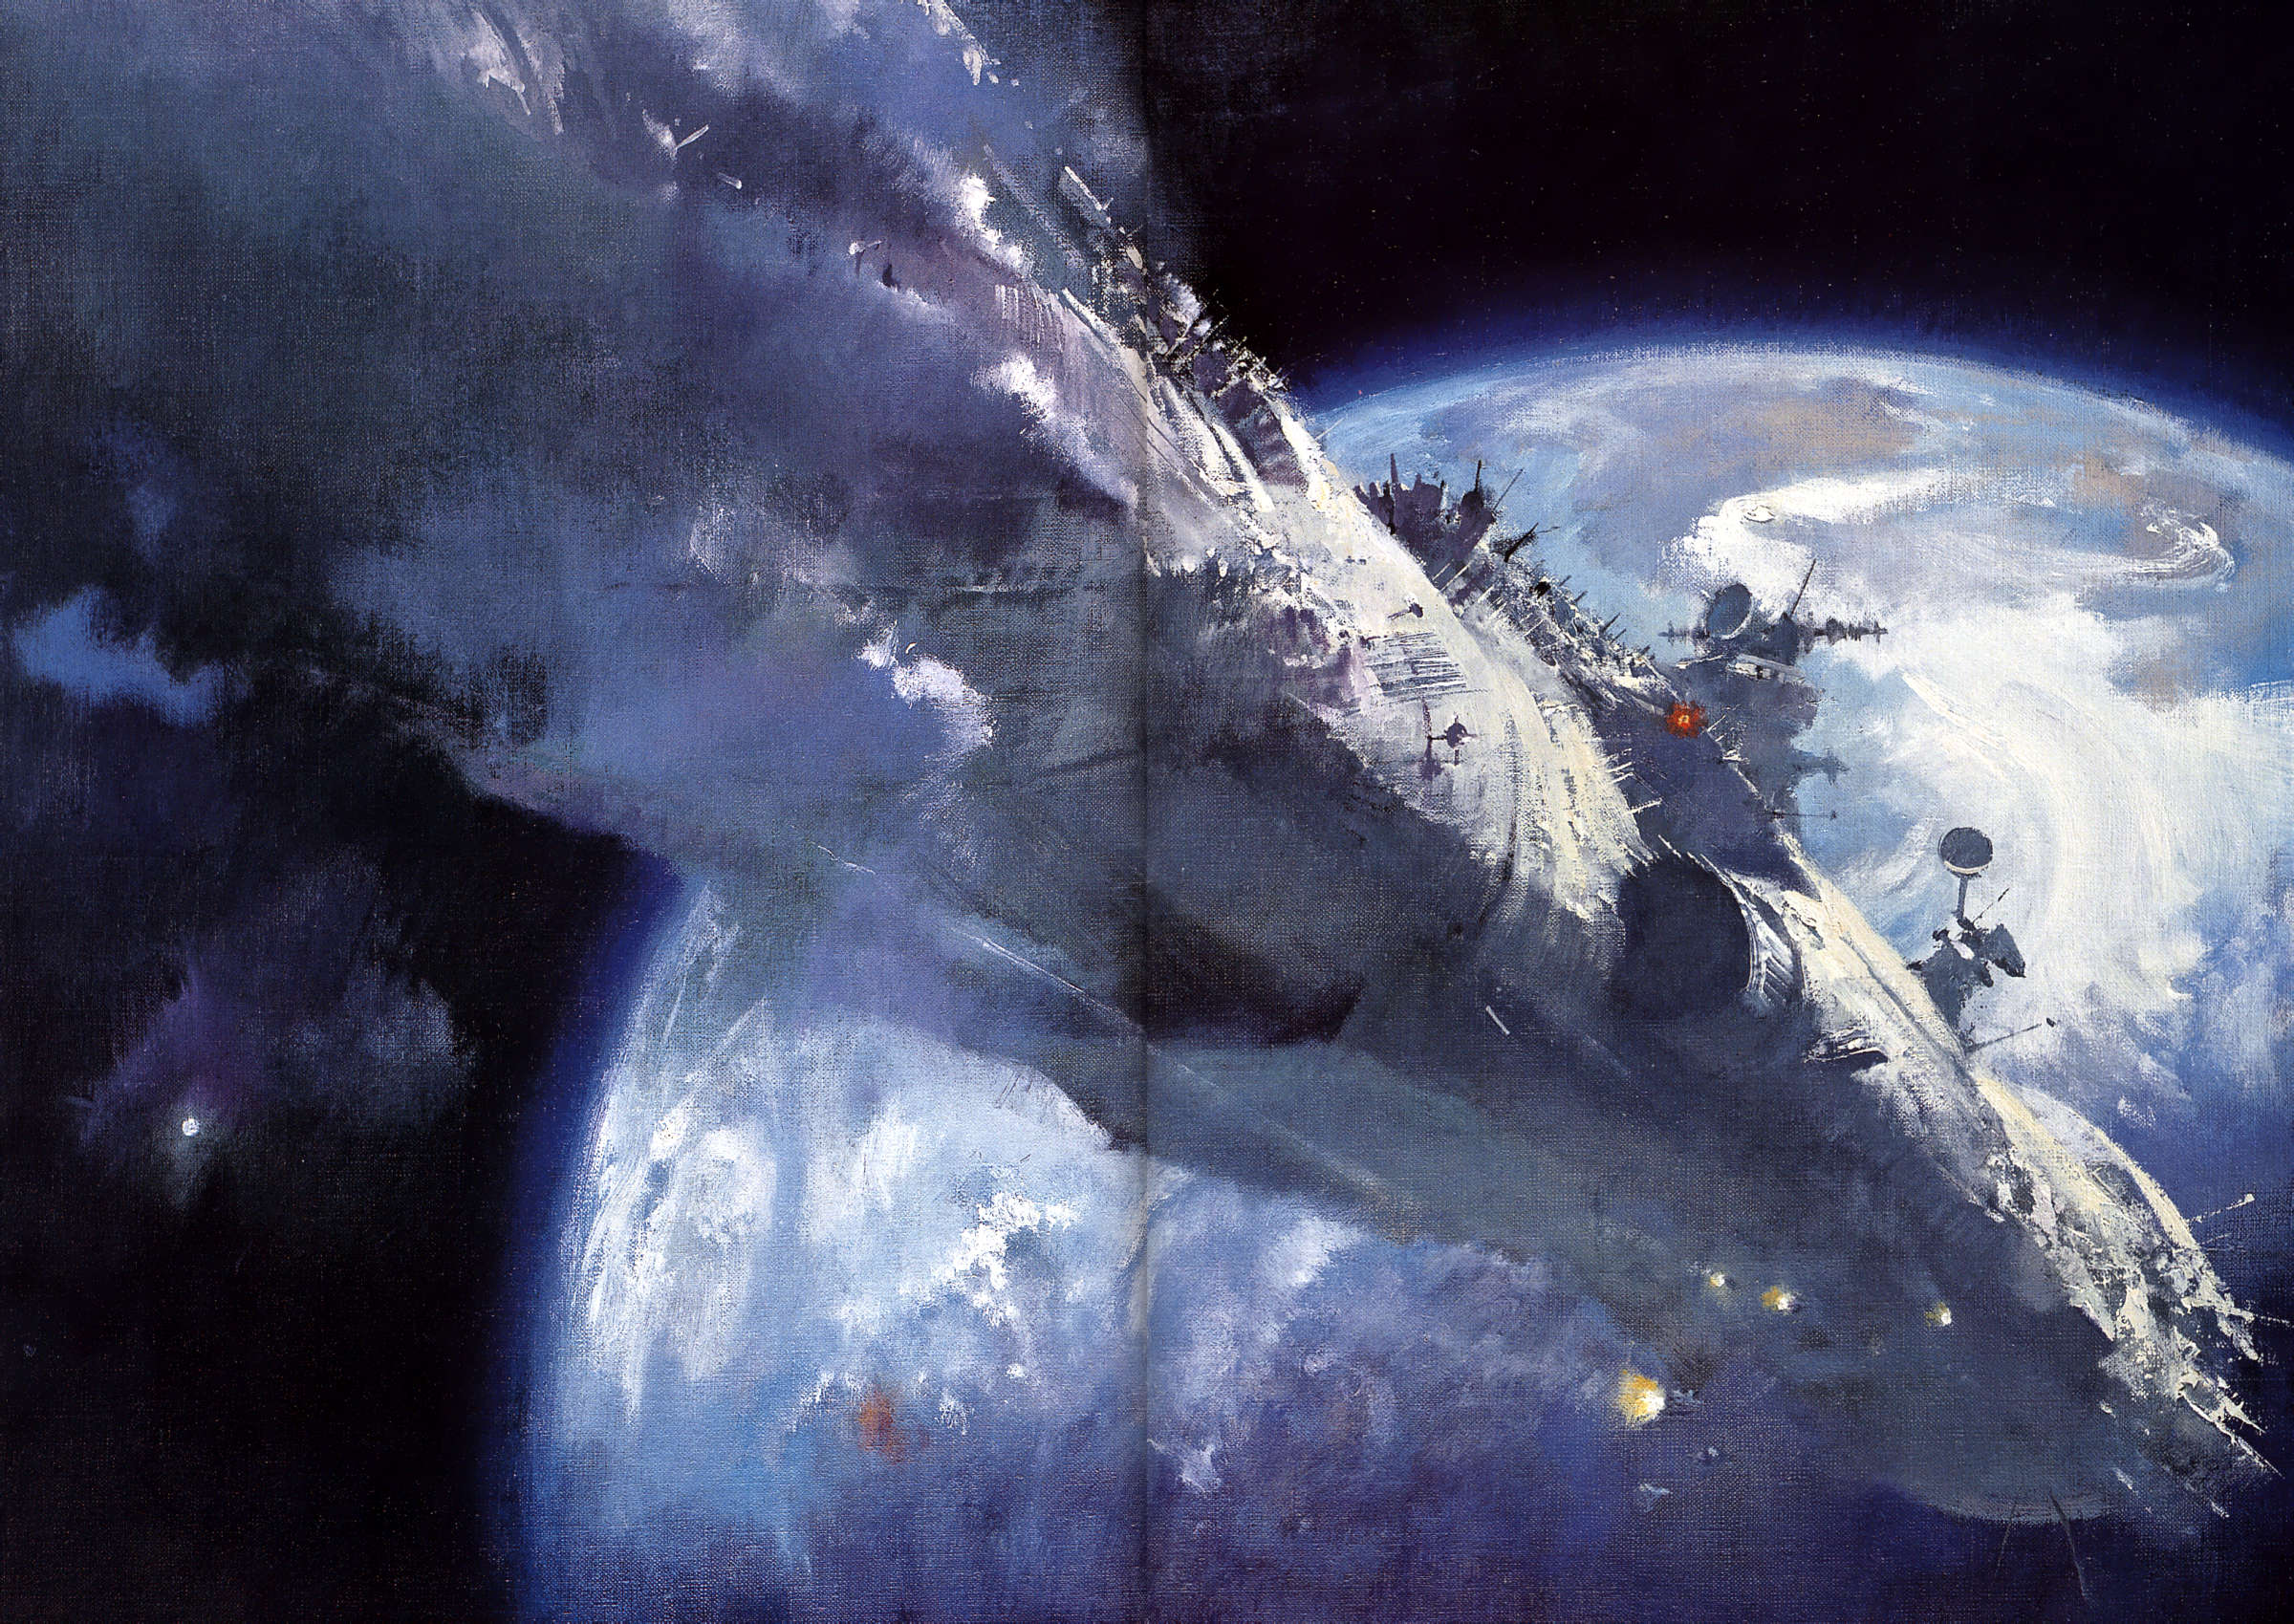 paintings, planets, spaceships, science fiction, artwork - desktop wallpaper